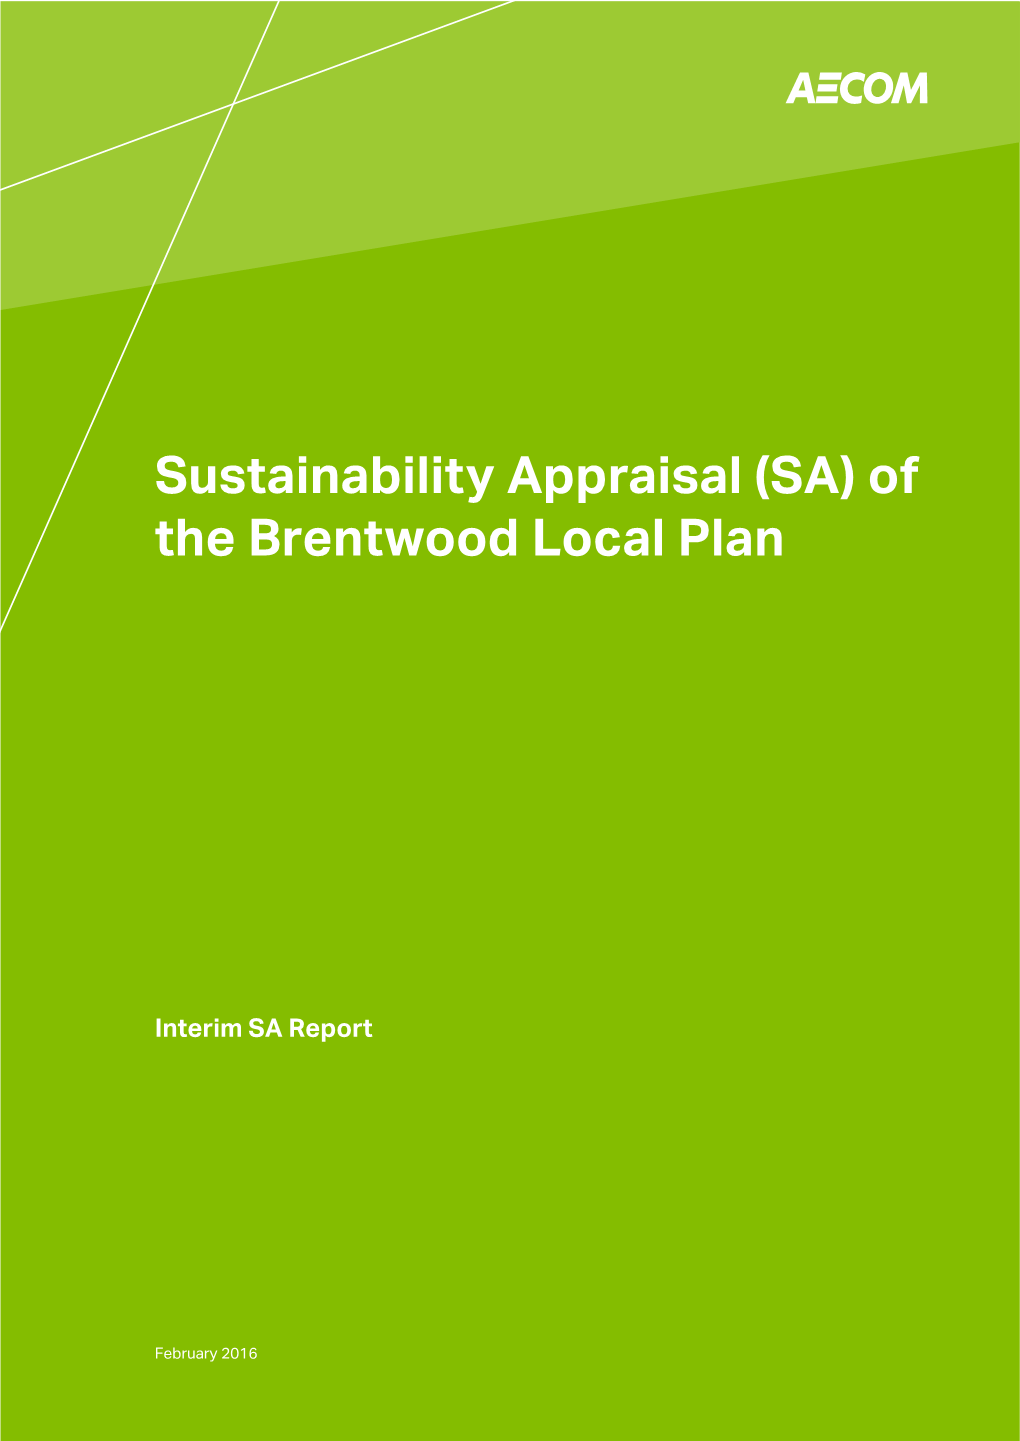 Brentwood Local Plan Interim SA Report (February 2016)